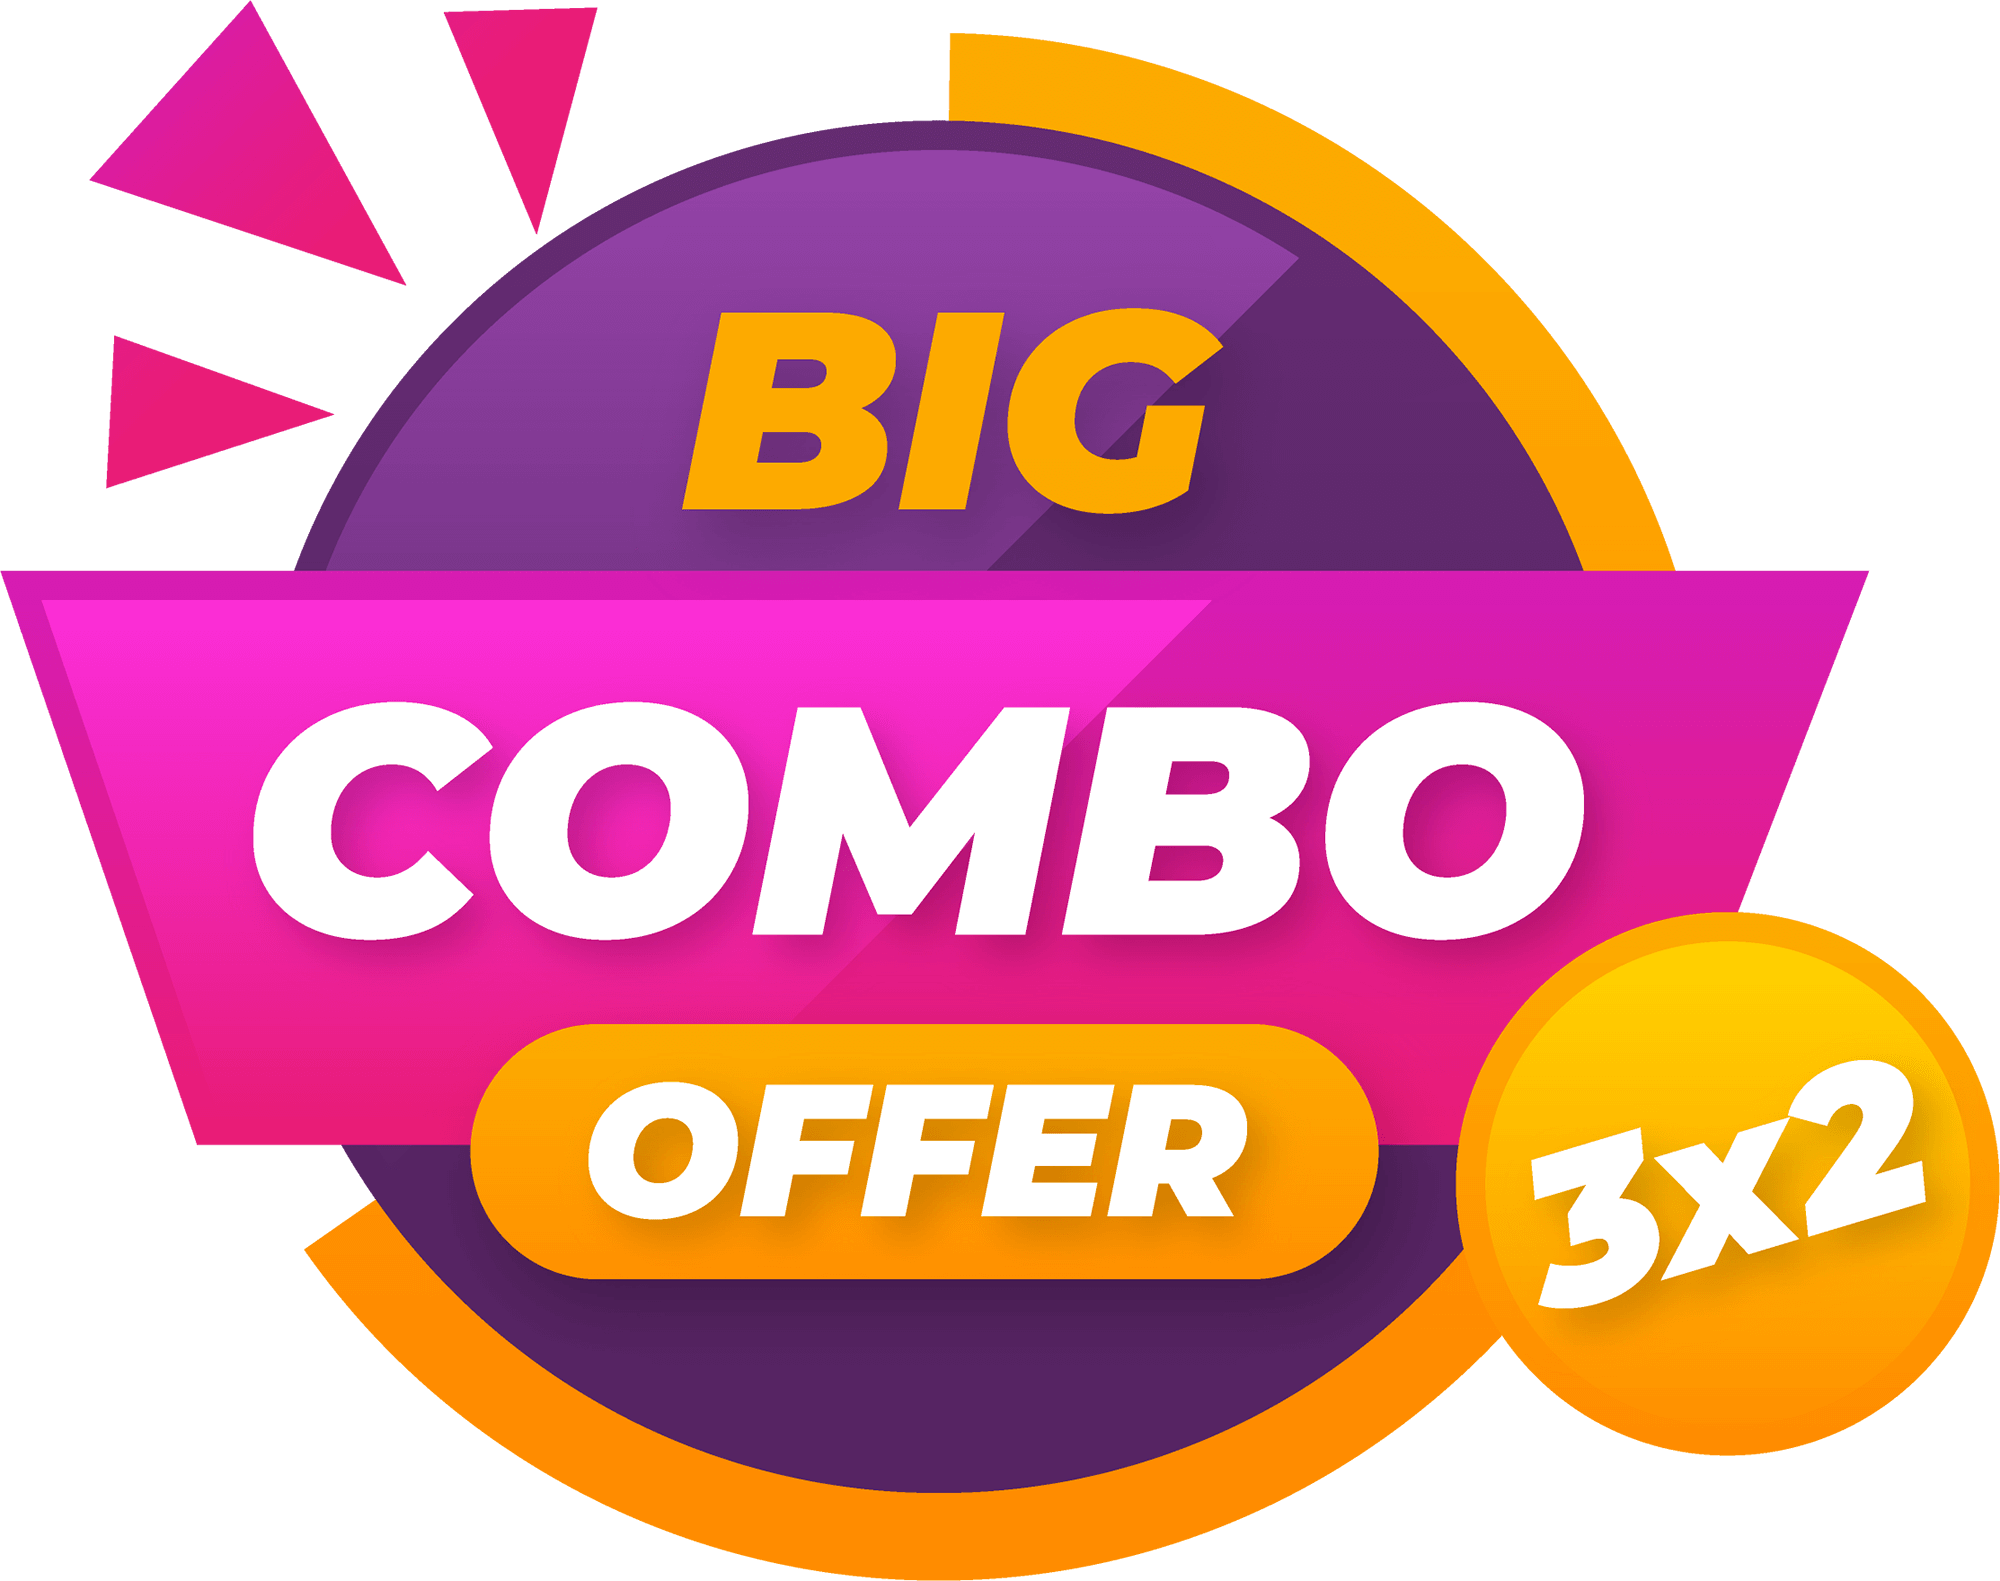 Big Combo Offer PNG Offer Sale PNG 30-50% off Image Download